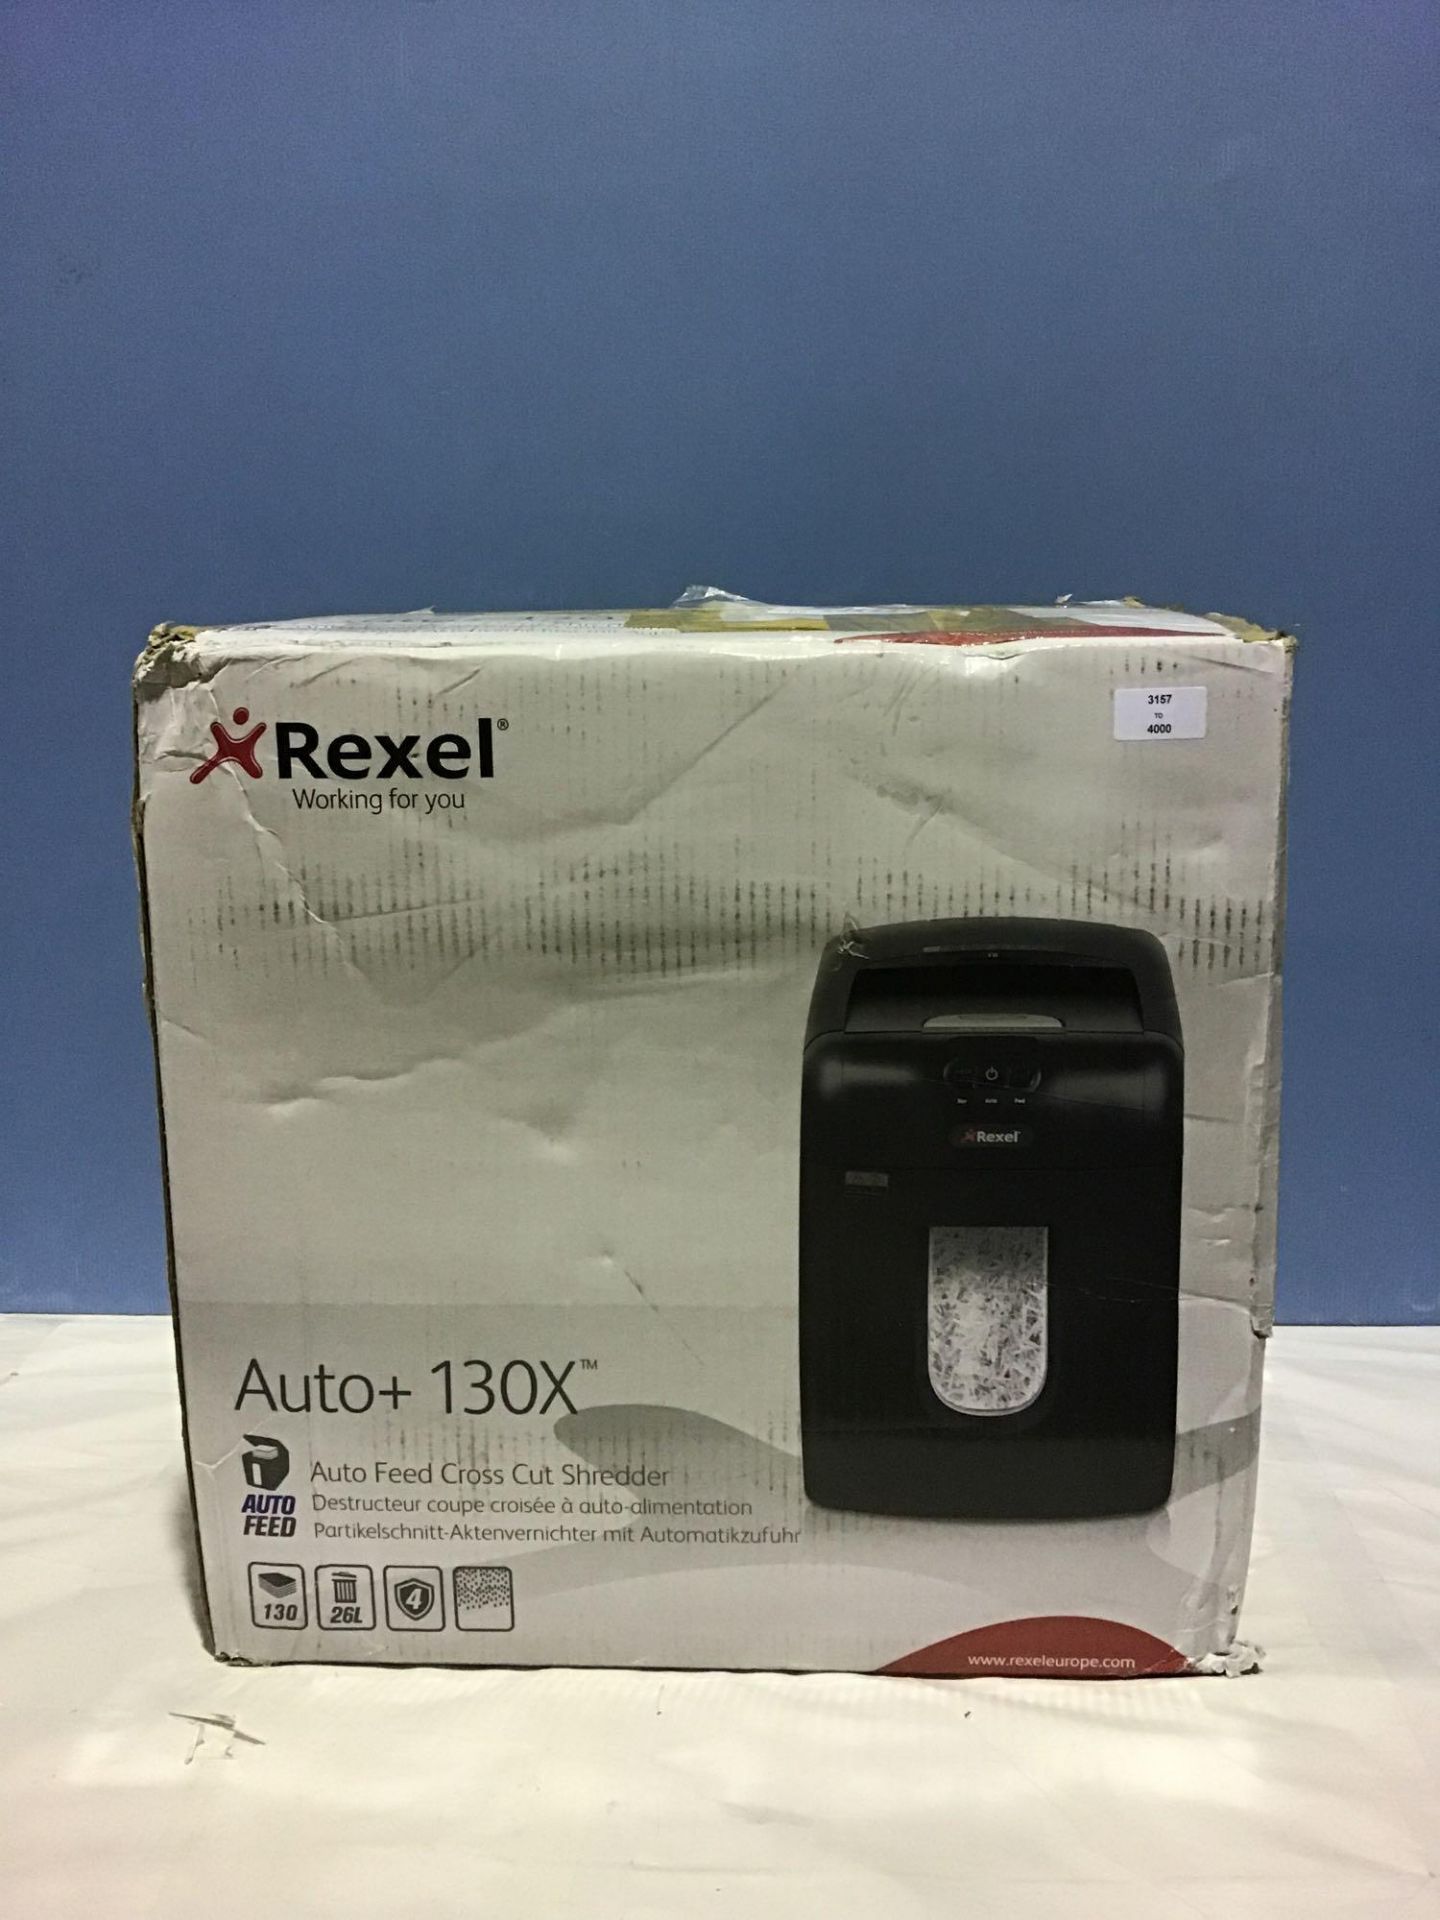 Rexel Auto+ 130X 2102559A Auto Feed 130 Sheet Cross Cut Shredder £198.28 RRP - Image 2 of 6